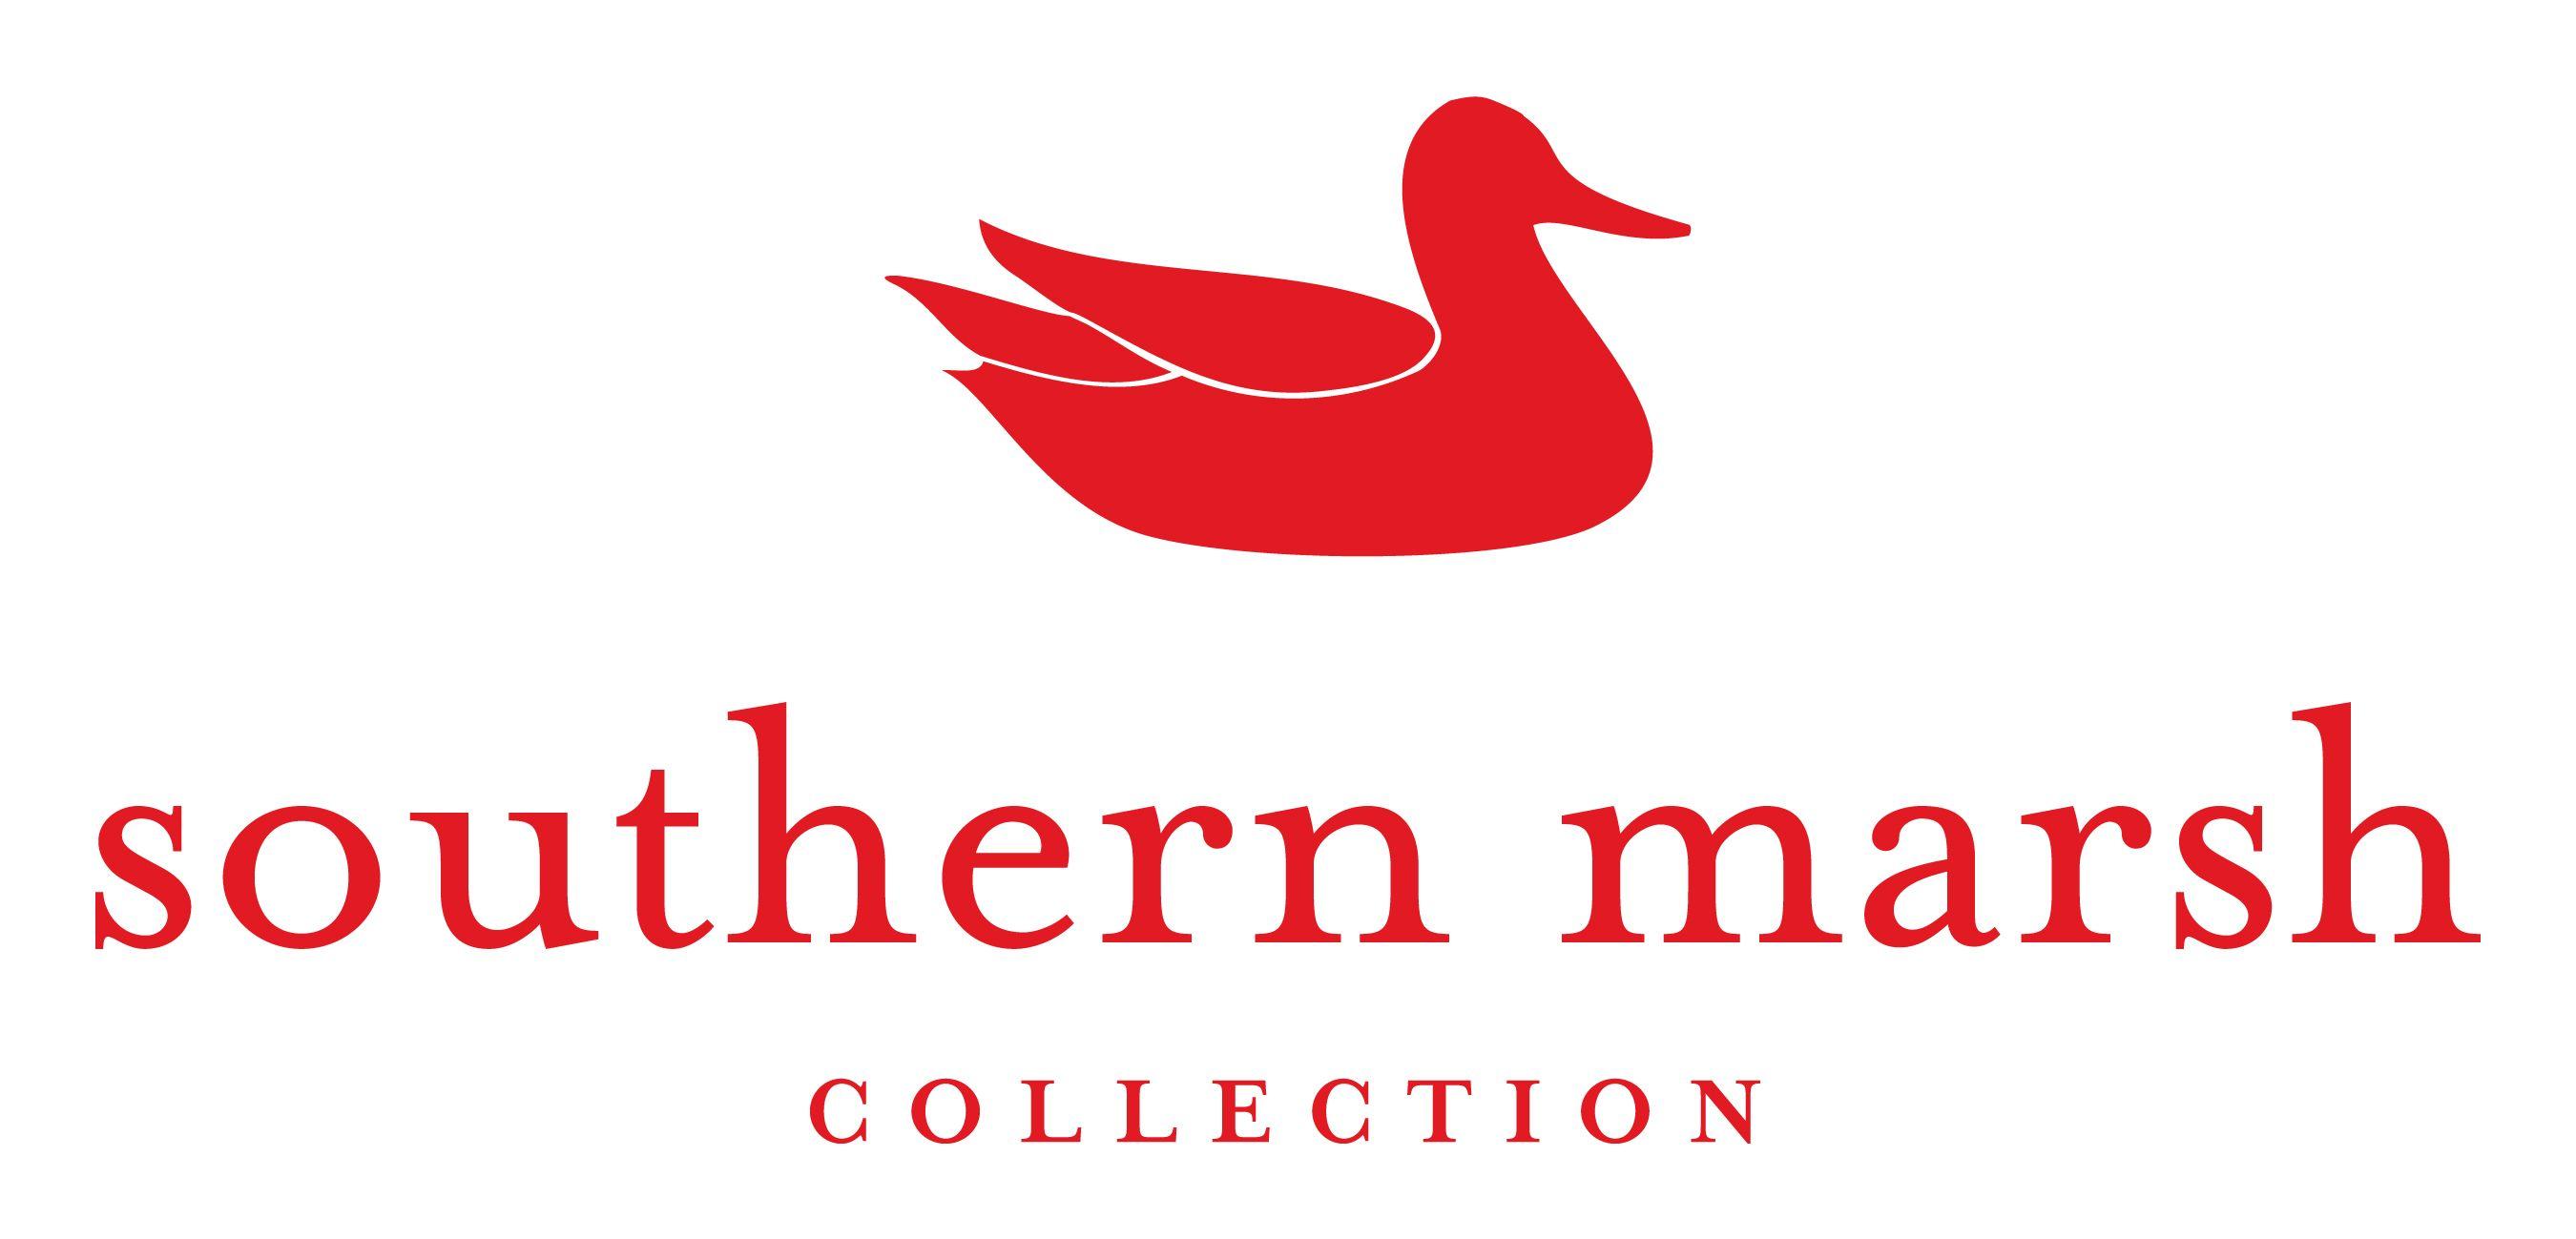 Southern Marsh Logo - southern marsh - Google Search | cooler | Southern marsh, Logos ...